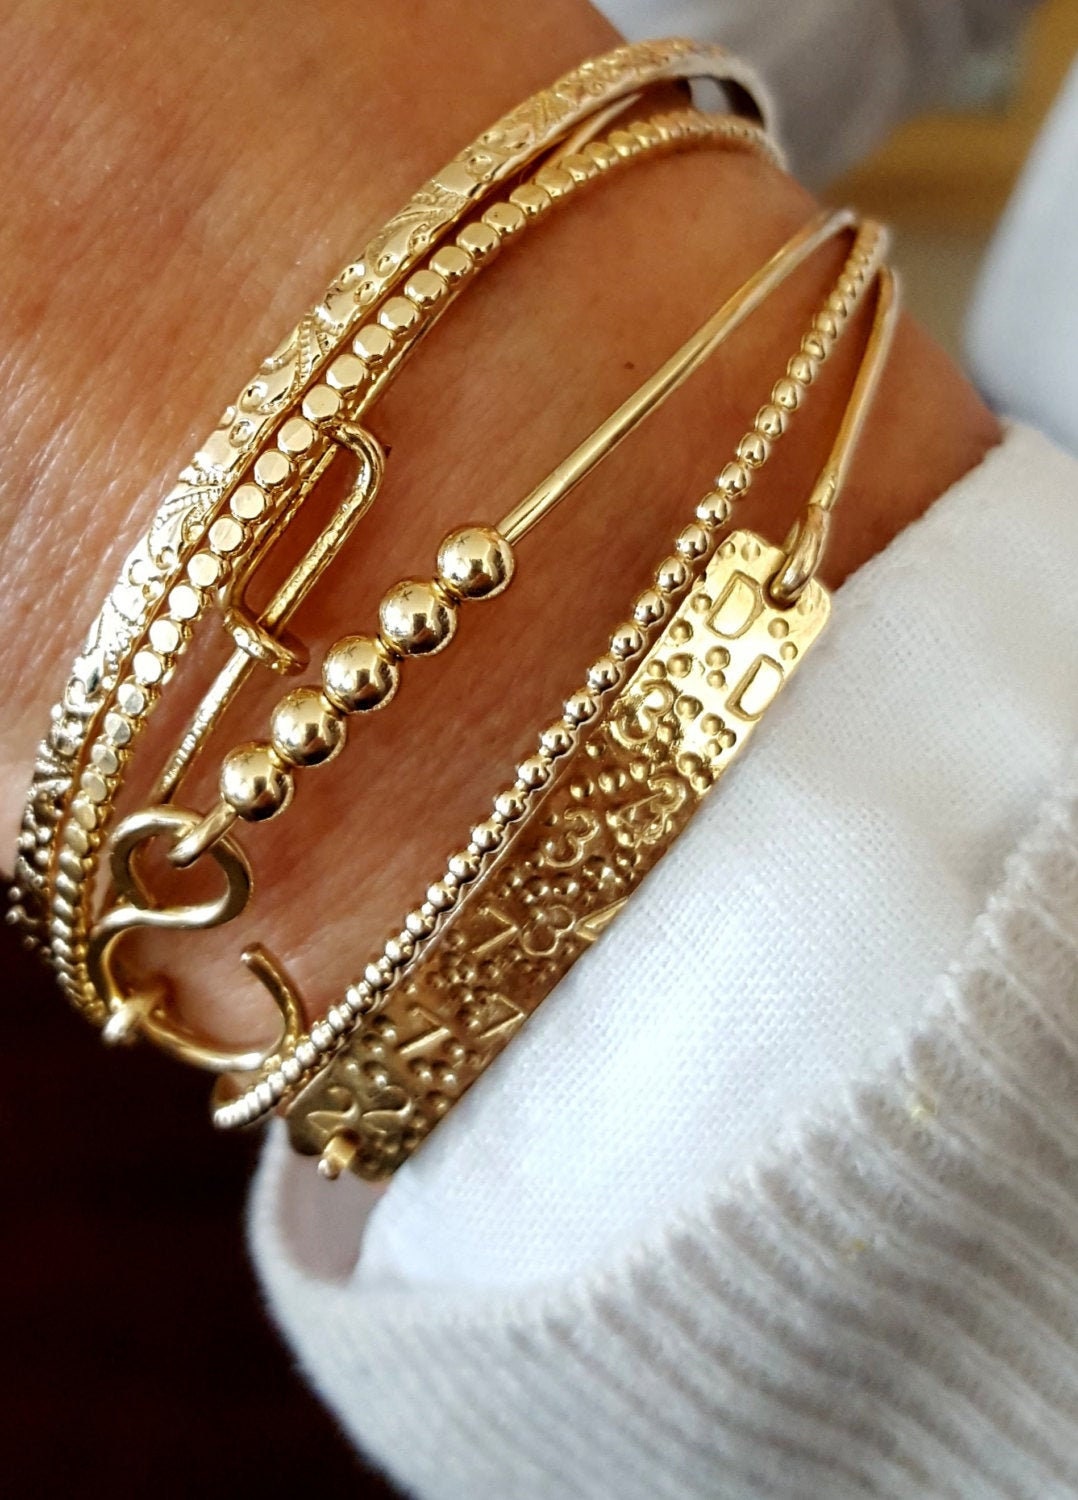 18 Chai bracelet - Good Luck Bracelet - Symbolic Bracelet - 14k Gold Filled Bracelet - Handmade Jewelry